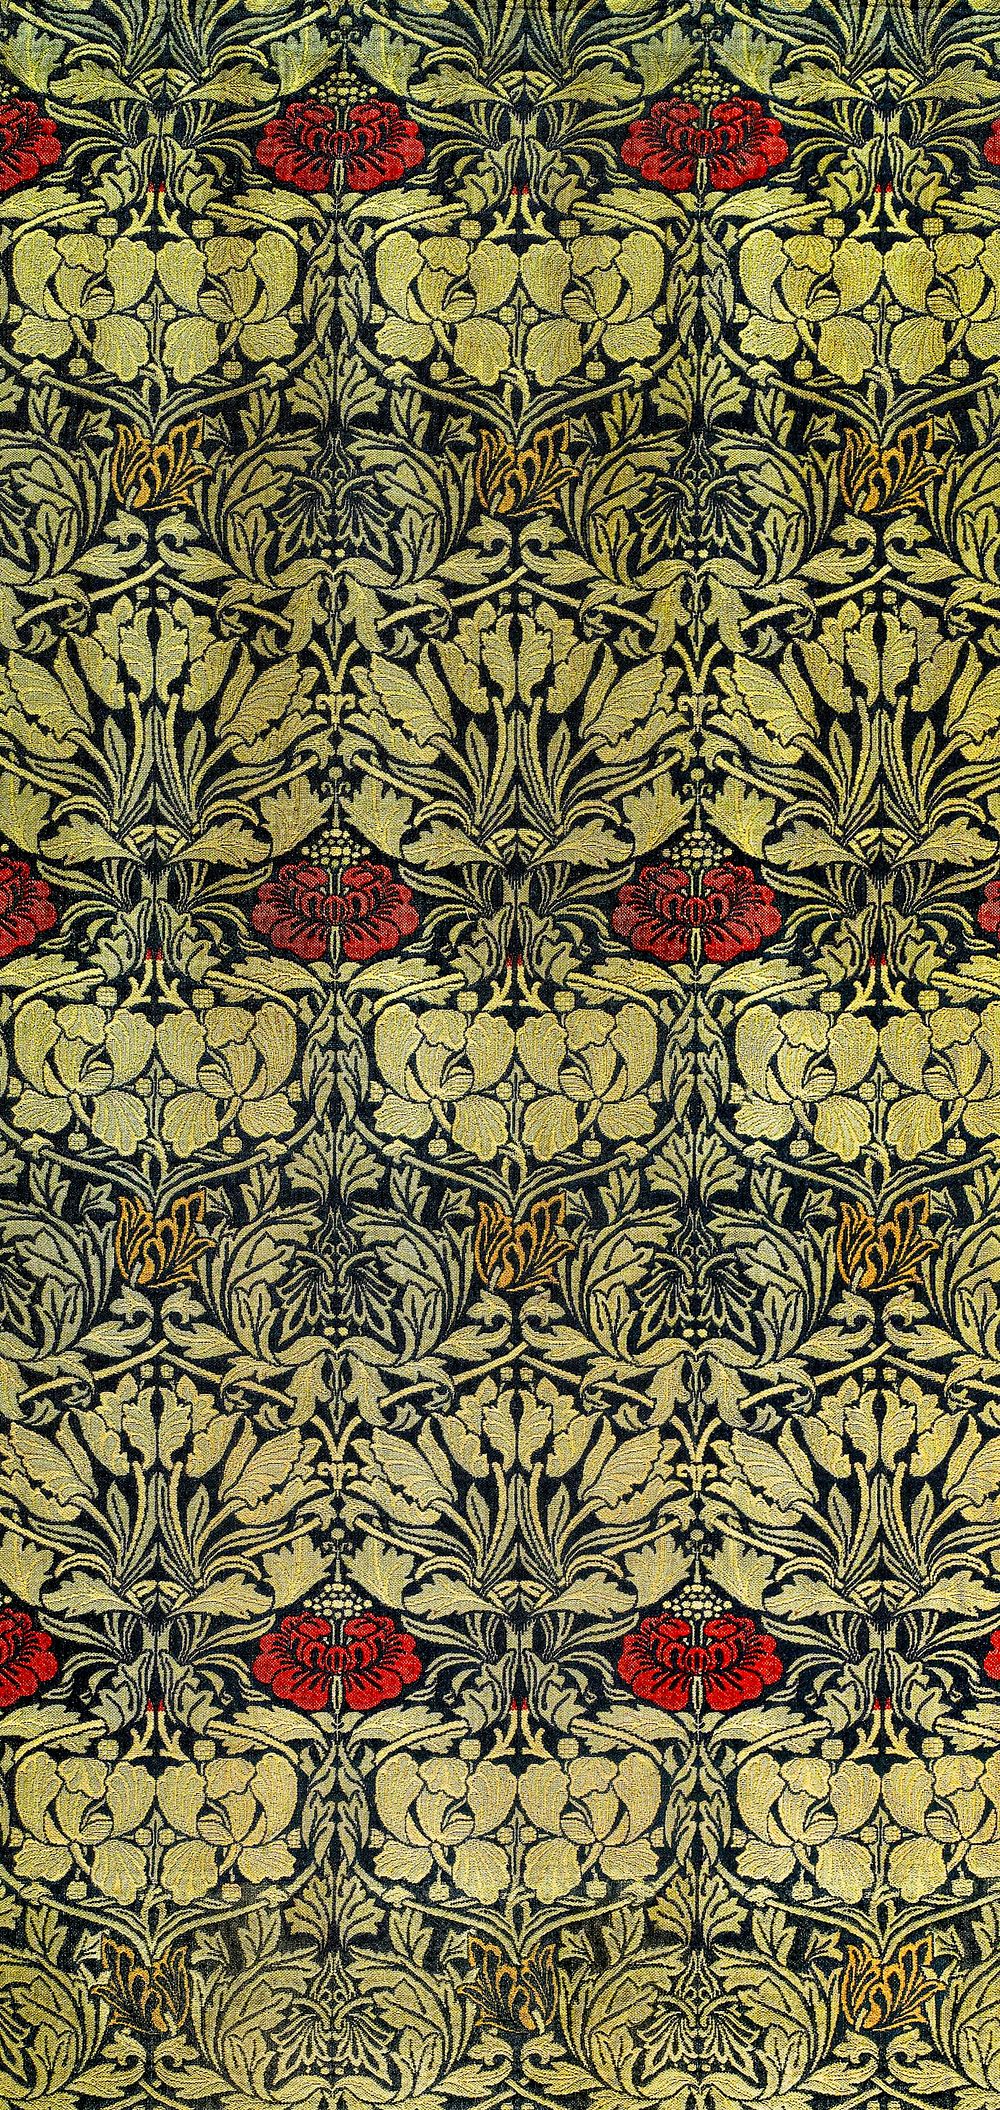 William Morris's Woven Fabric: Tulip | Free Photo Illustration - rawpixel